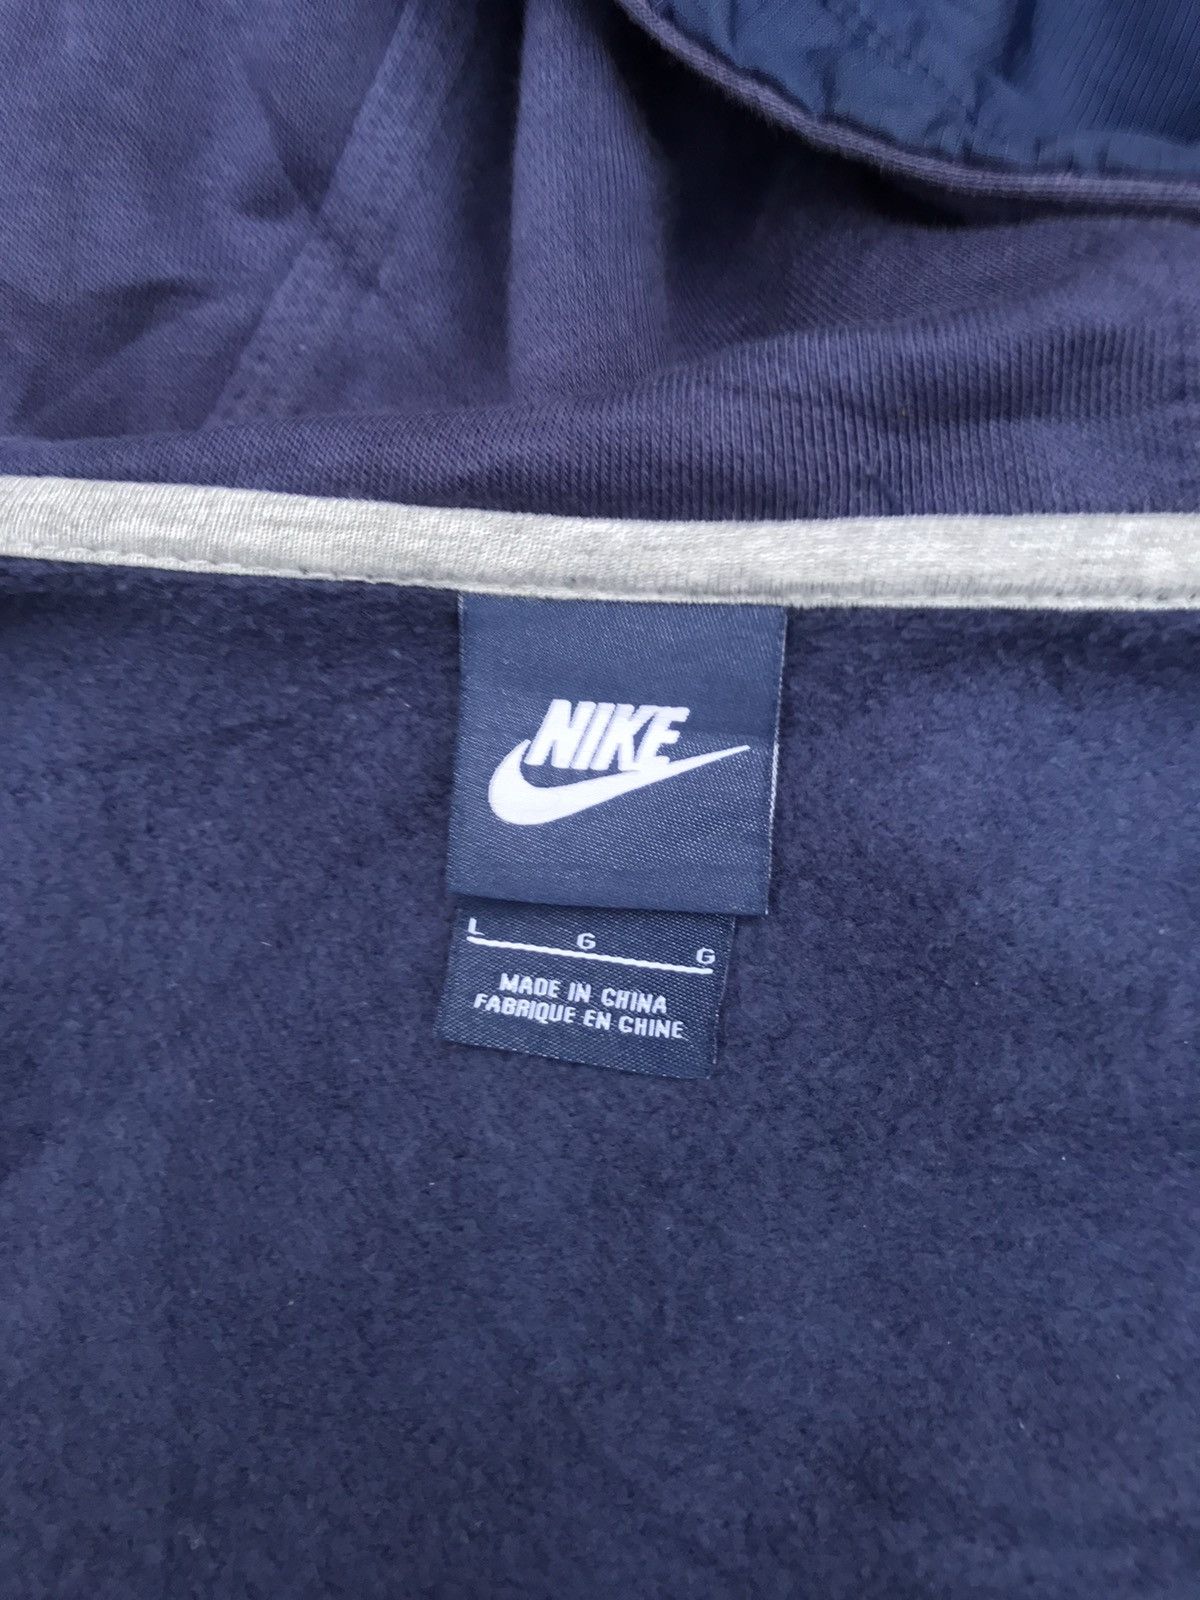 Nike Nike Fleece Hoodie Jacket Size US M / EU 48-50 / 2 - 5 Thumbnail